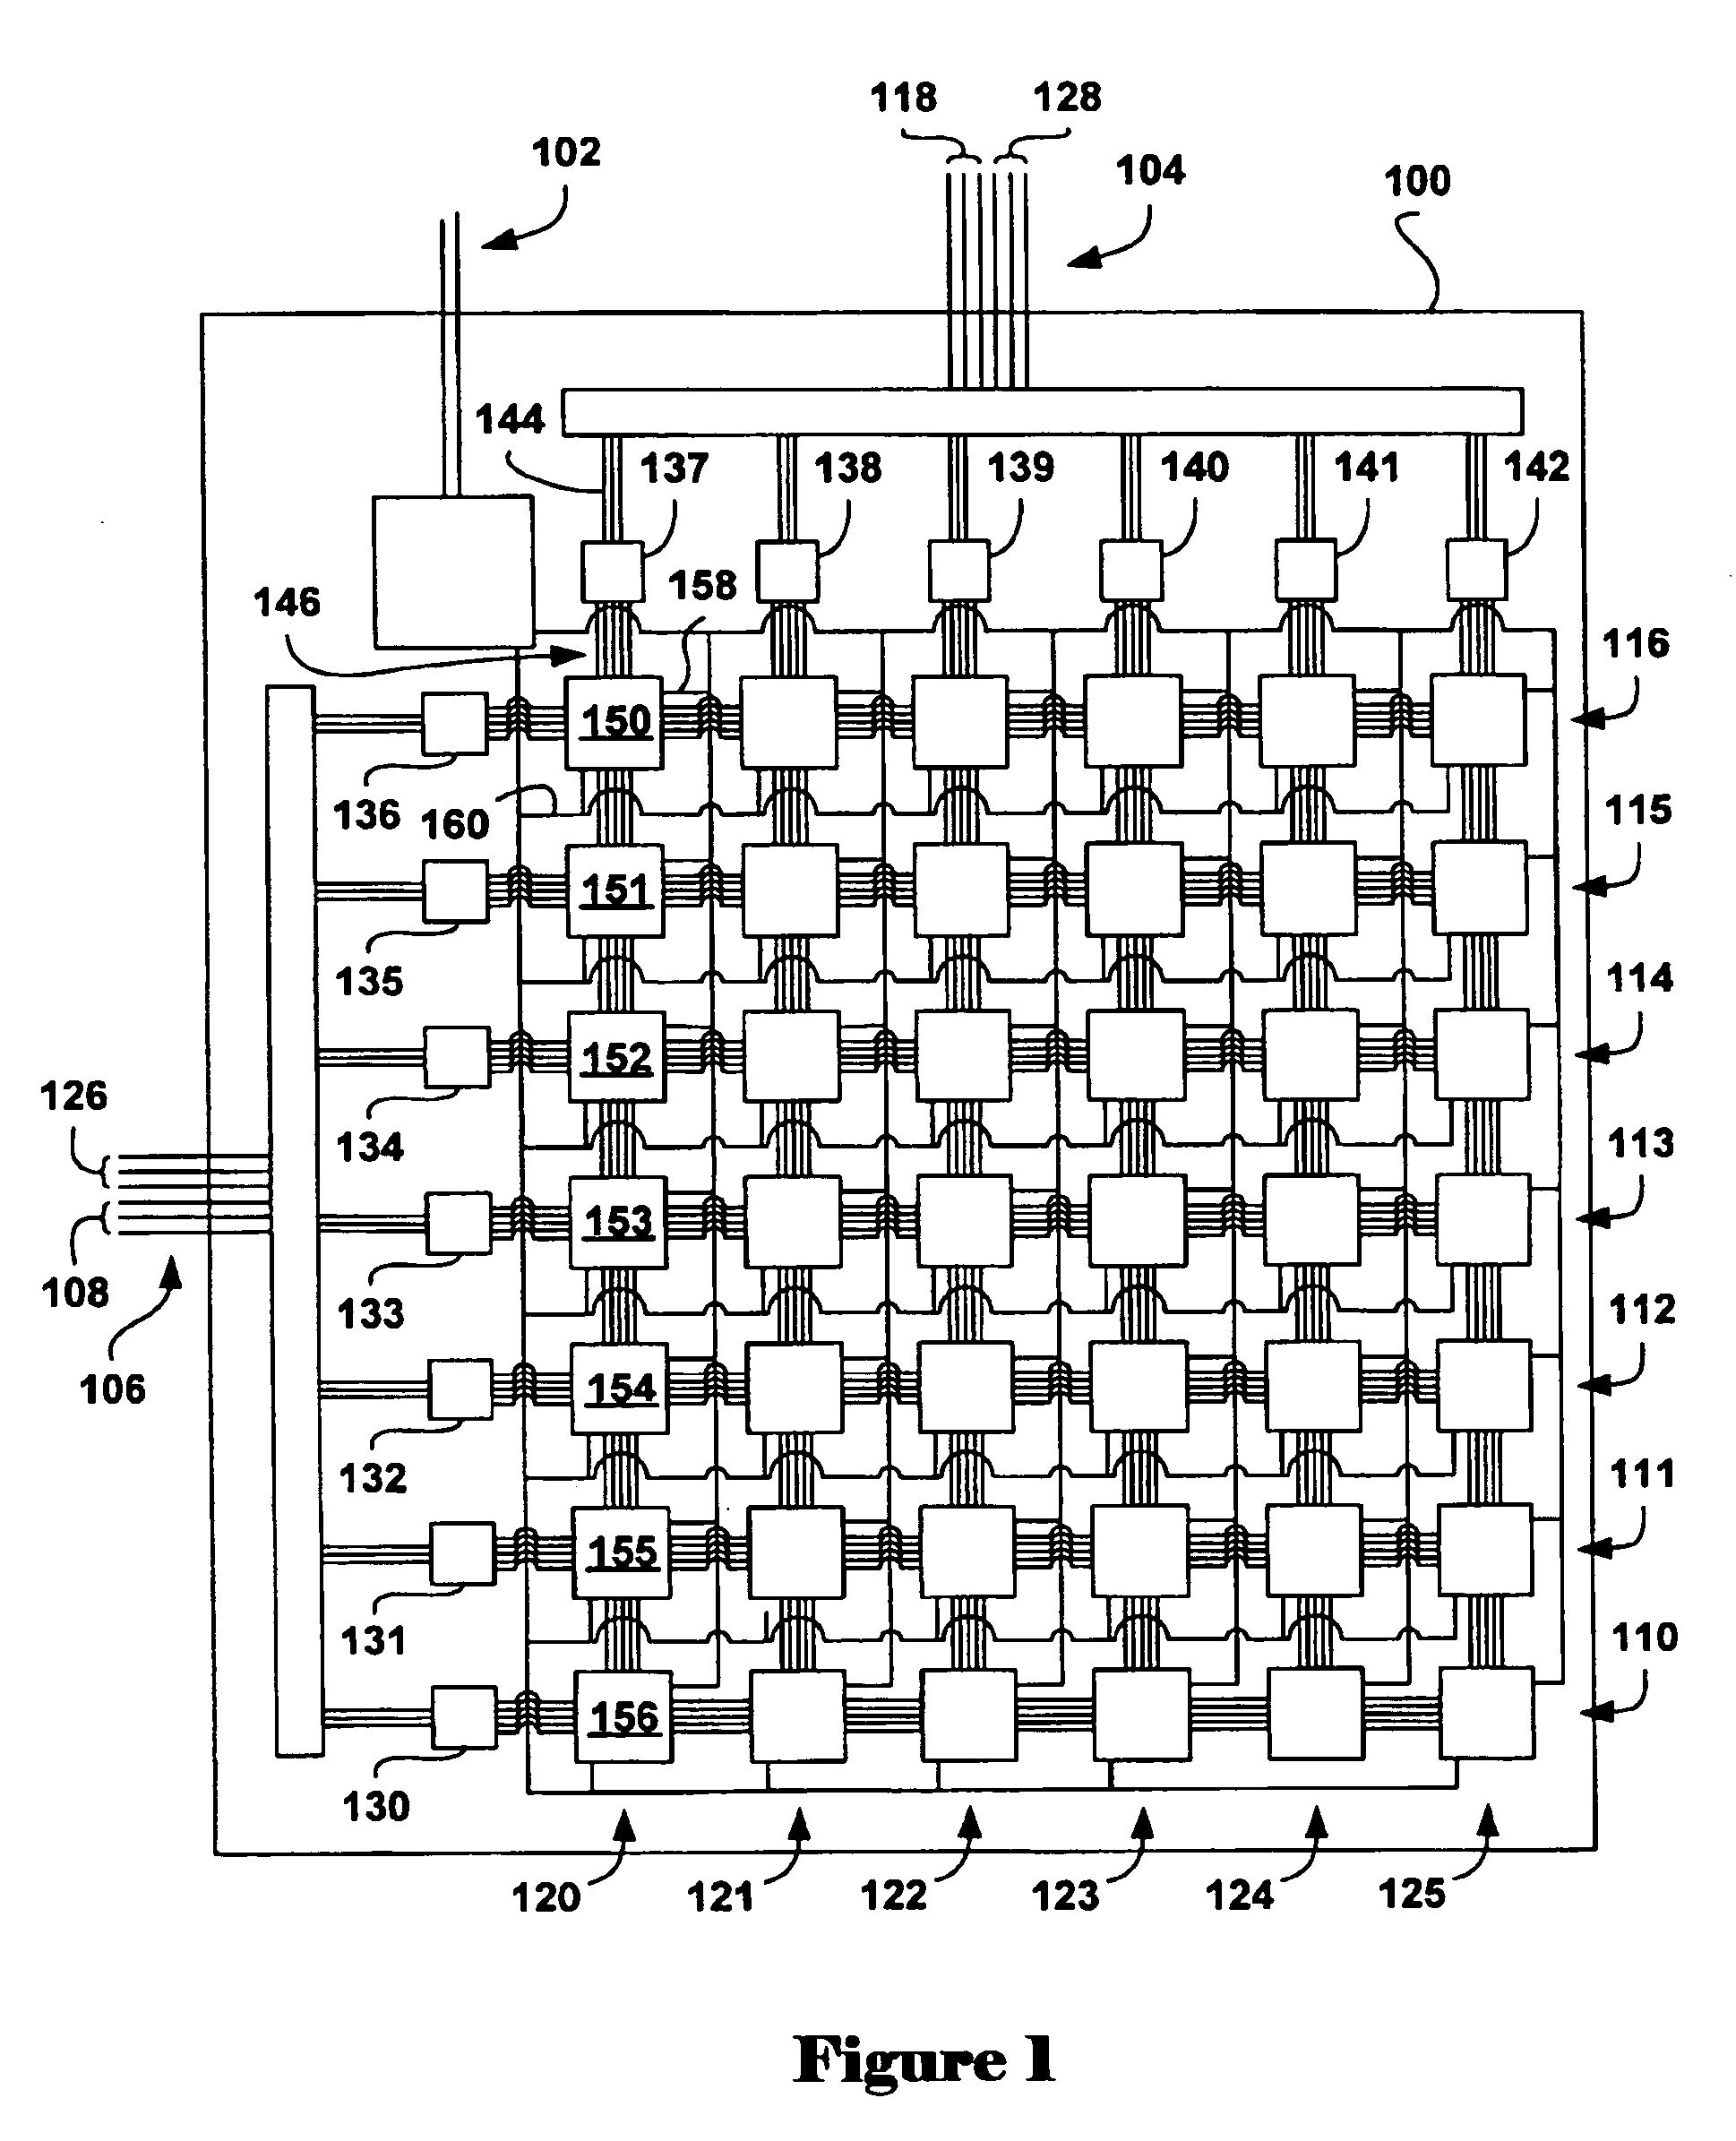 Defect-tolerant and fault-tolerant circuit interconnections